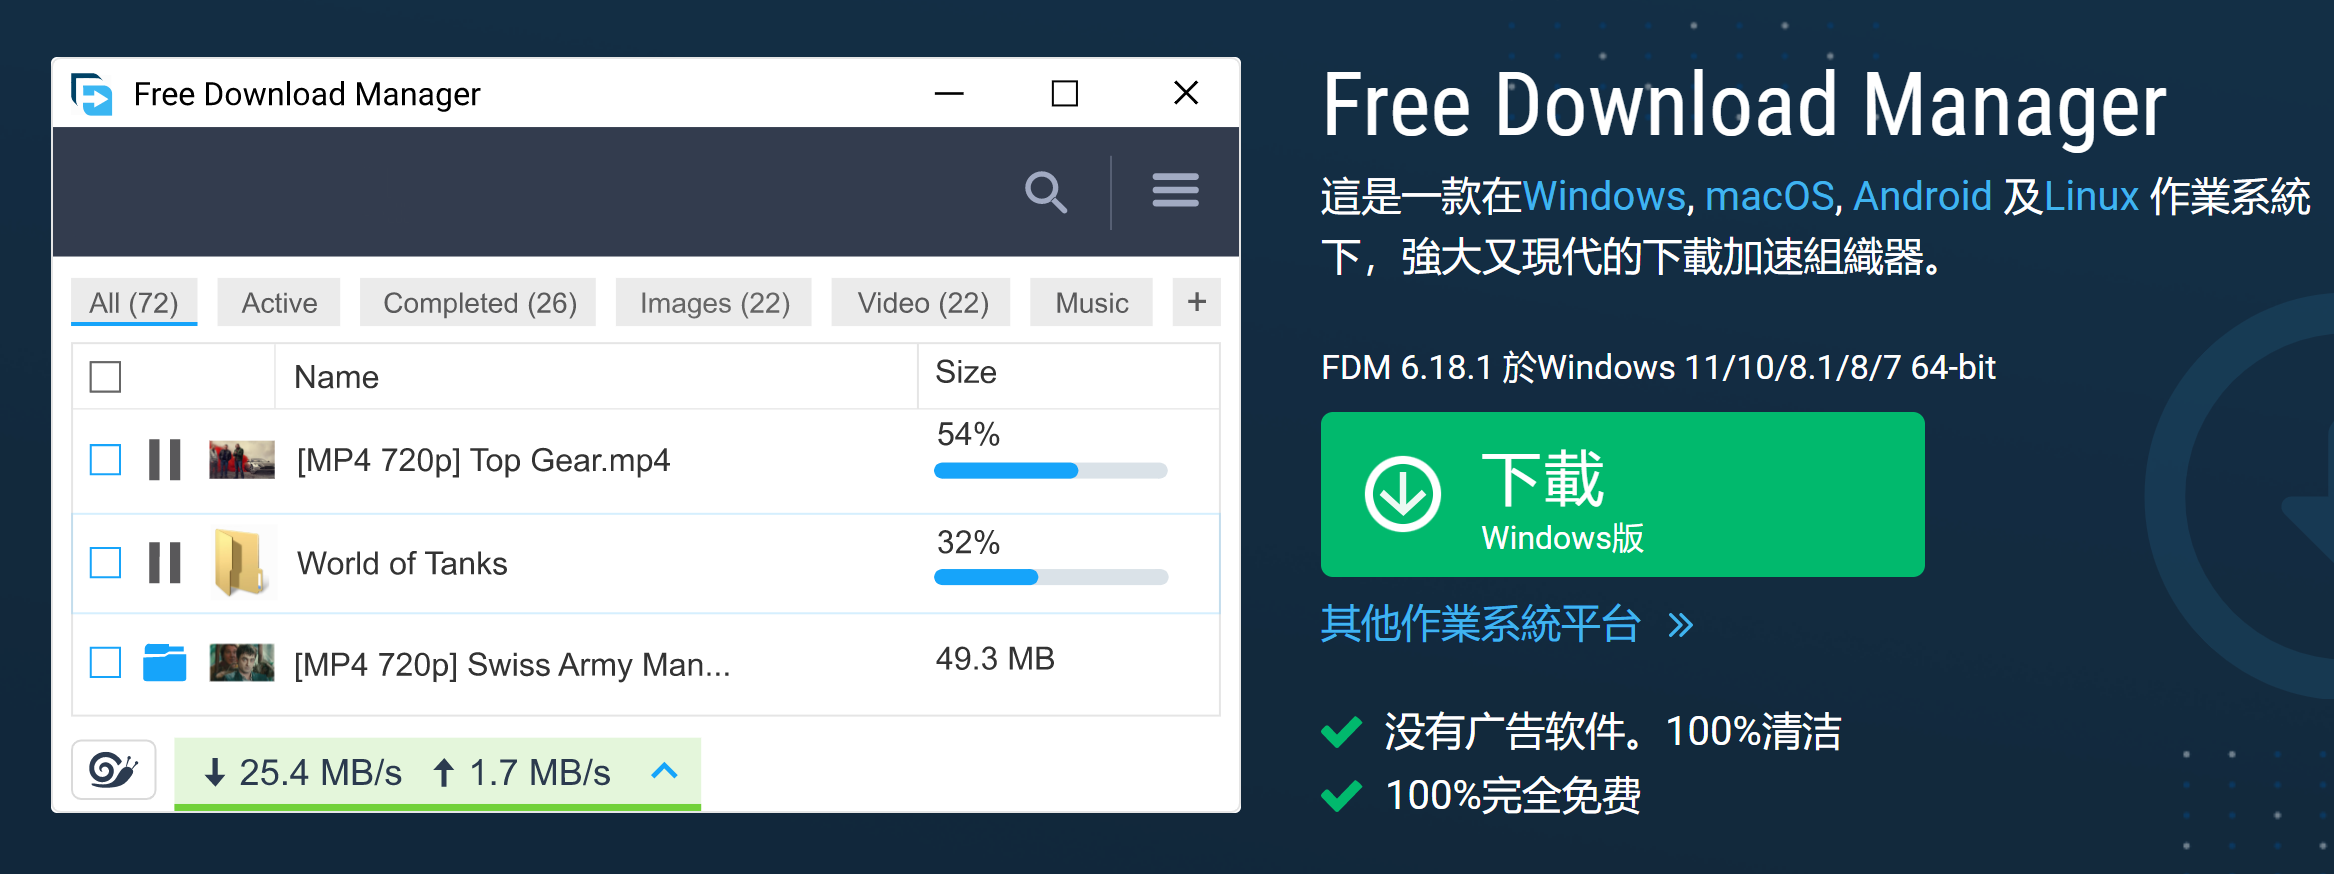 FDM-Free Download Manager 下载软件